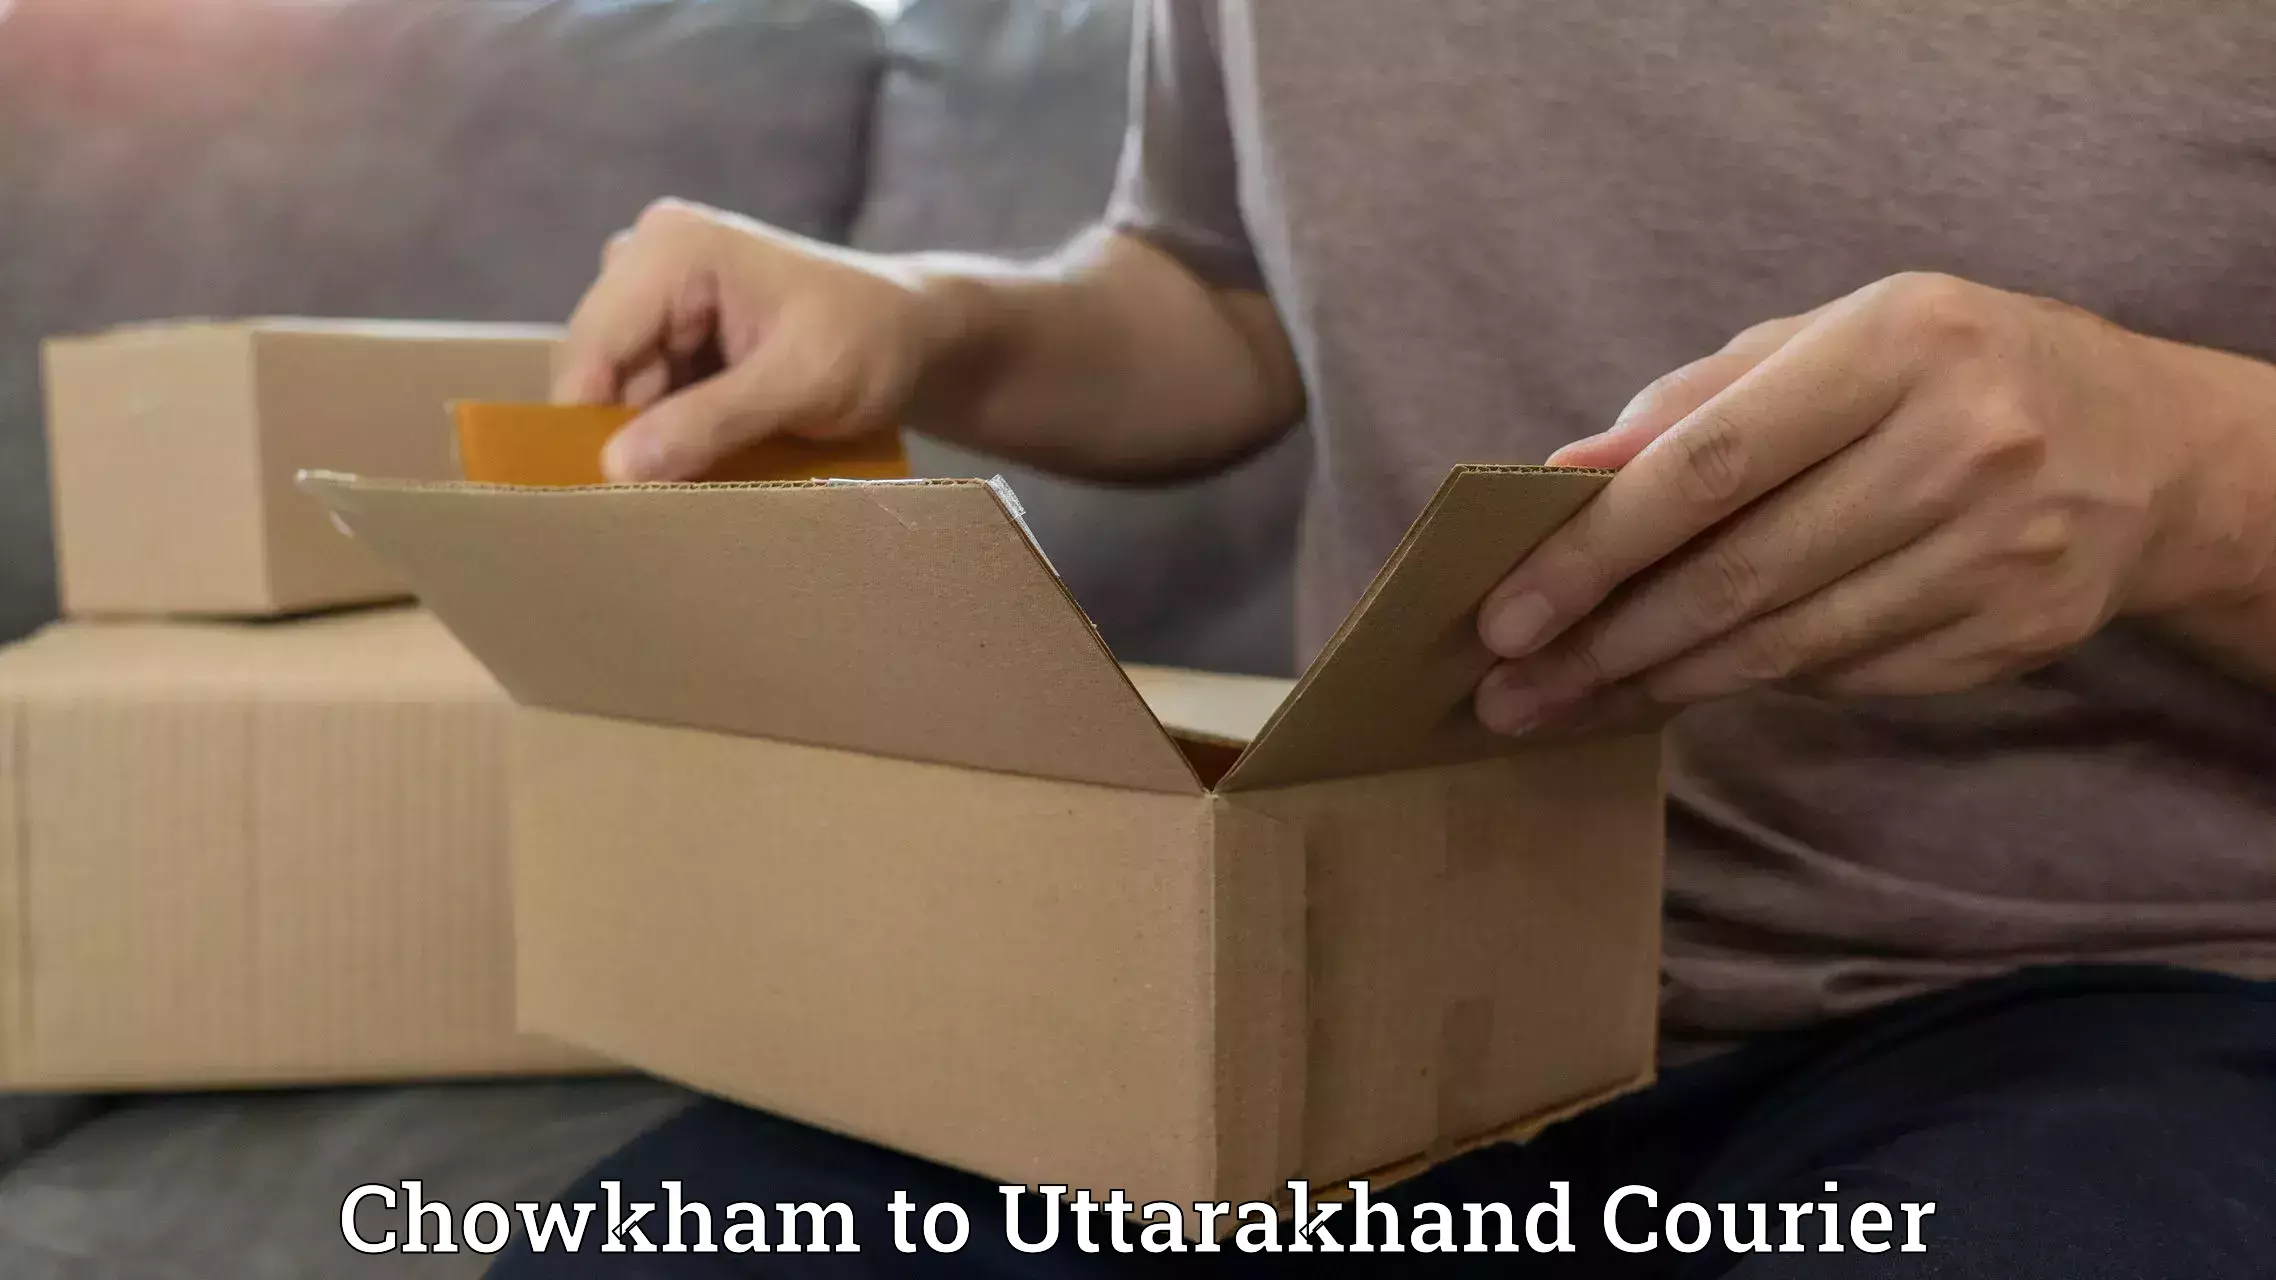 Courier service comparison in Chowkham to Uttarkashi